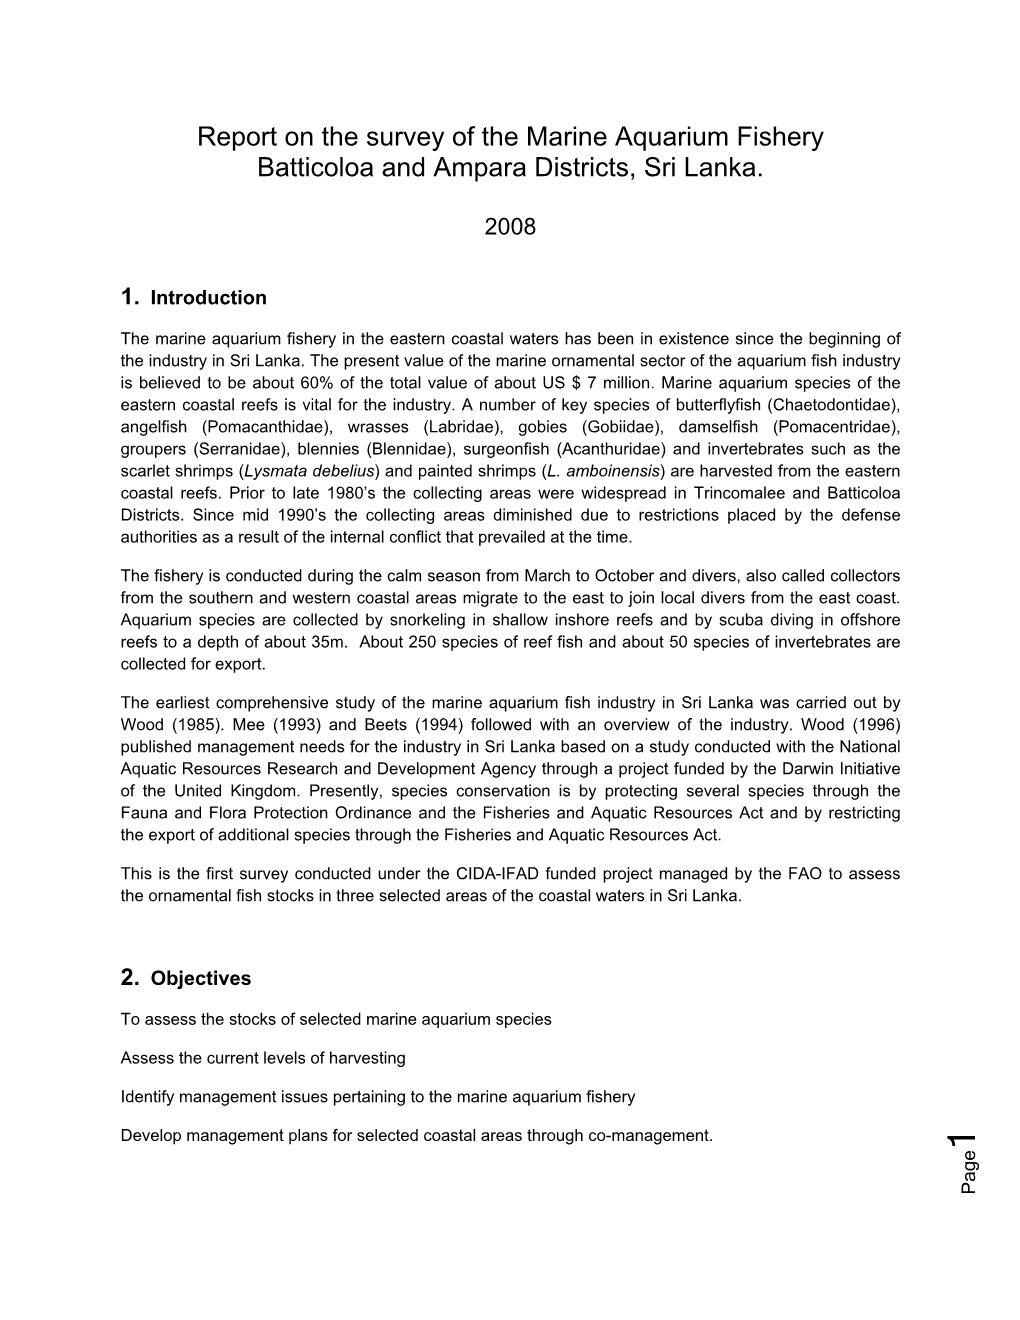 Report on the Survey of the Marine Aquarium Fishery Batticoloa and Ampara Districts, Sri Lanka